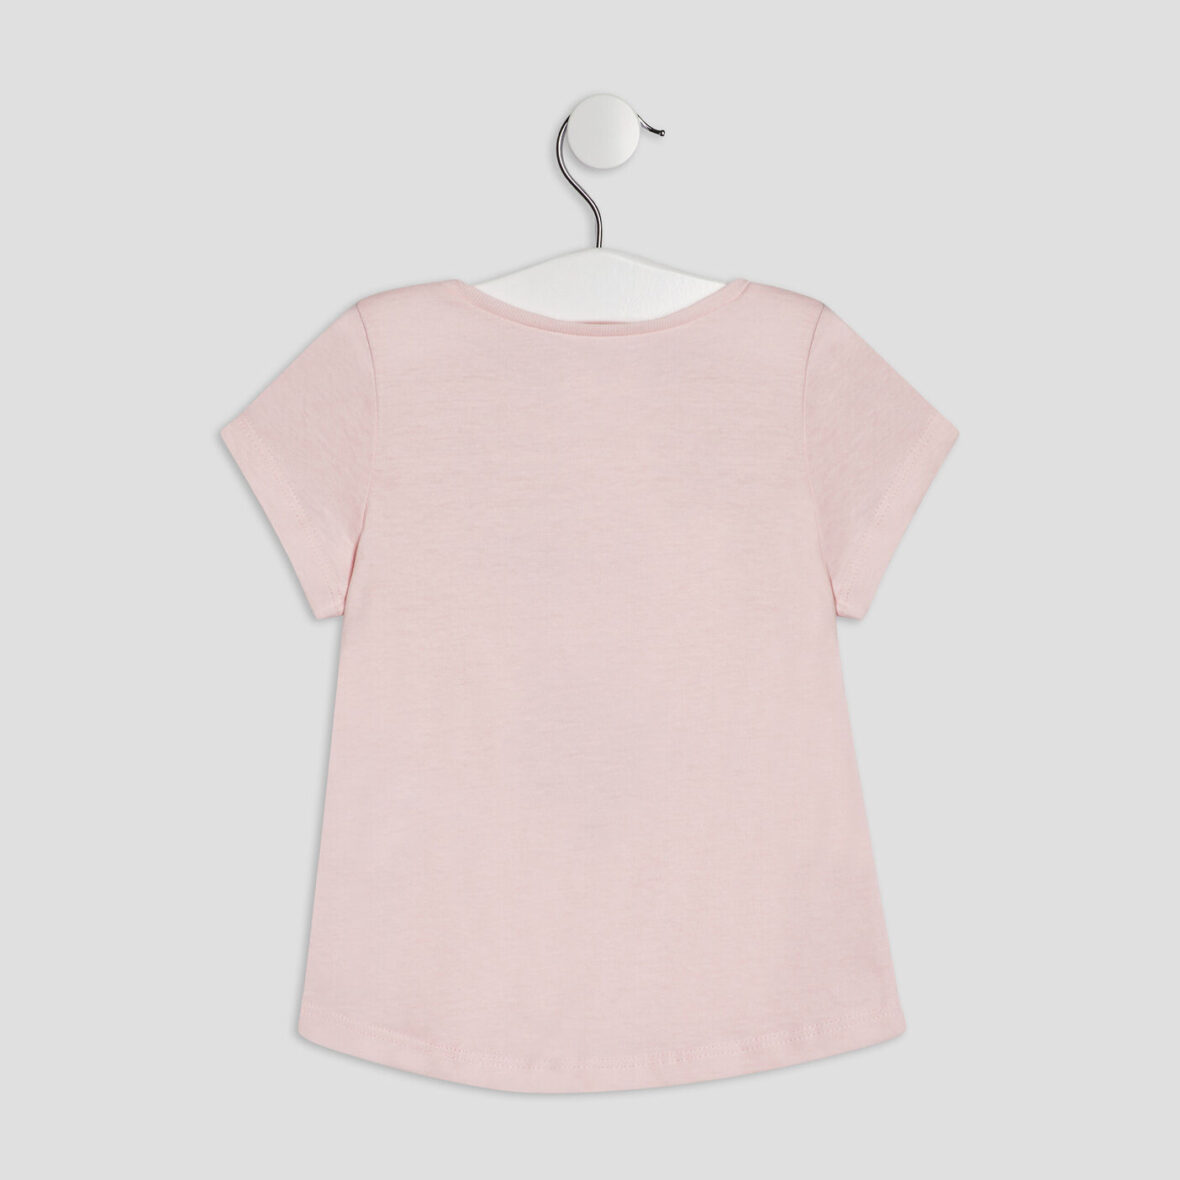 t-shirt-manches-courtes-rose-clair-bebef-a-36165600546340421